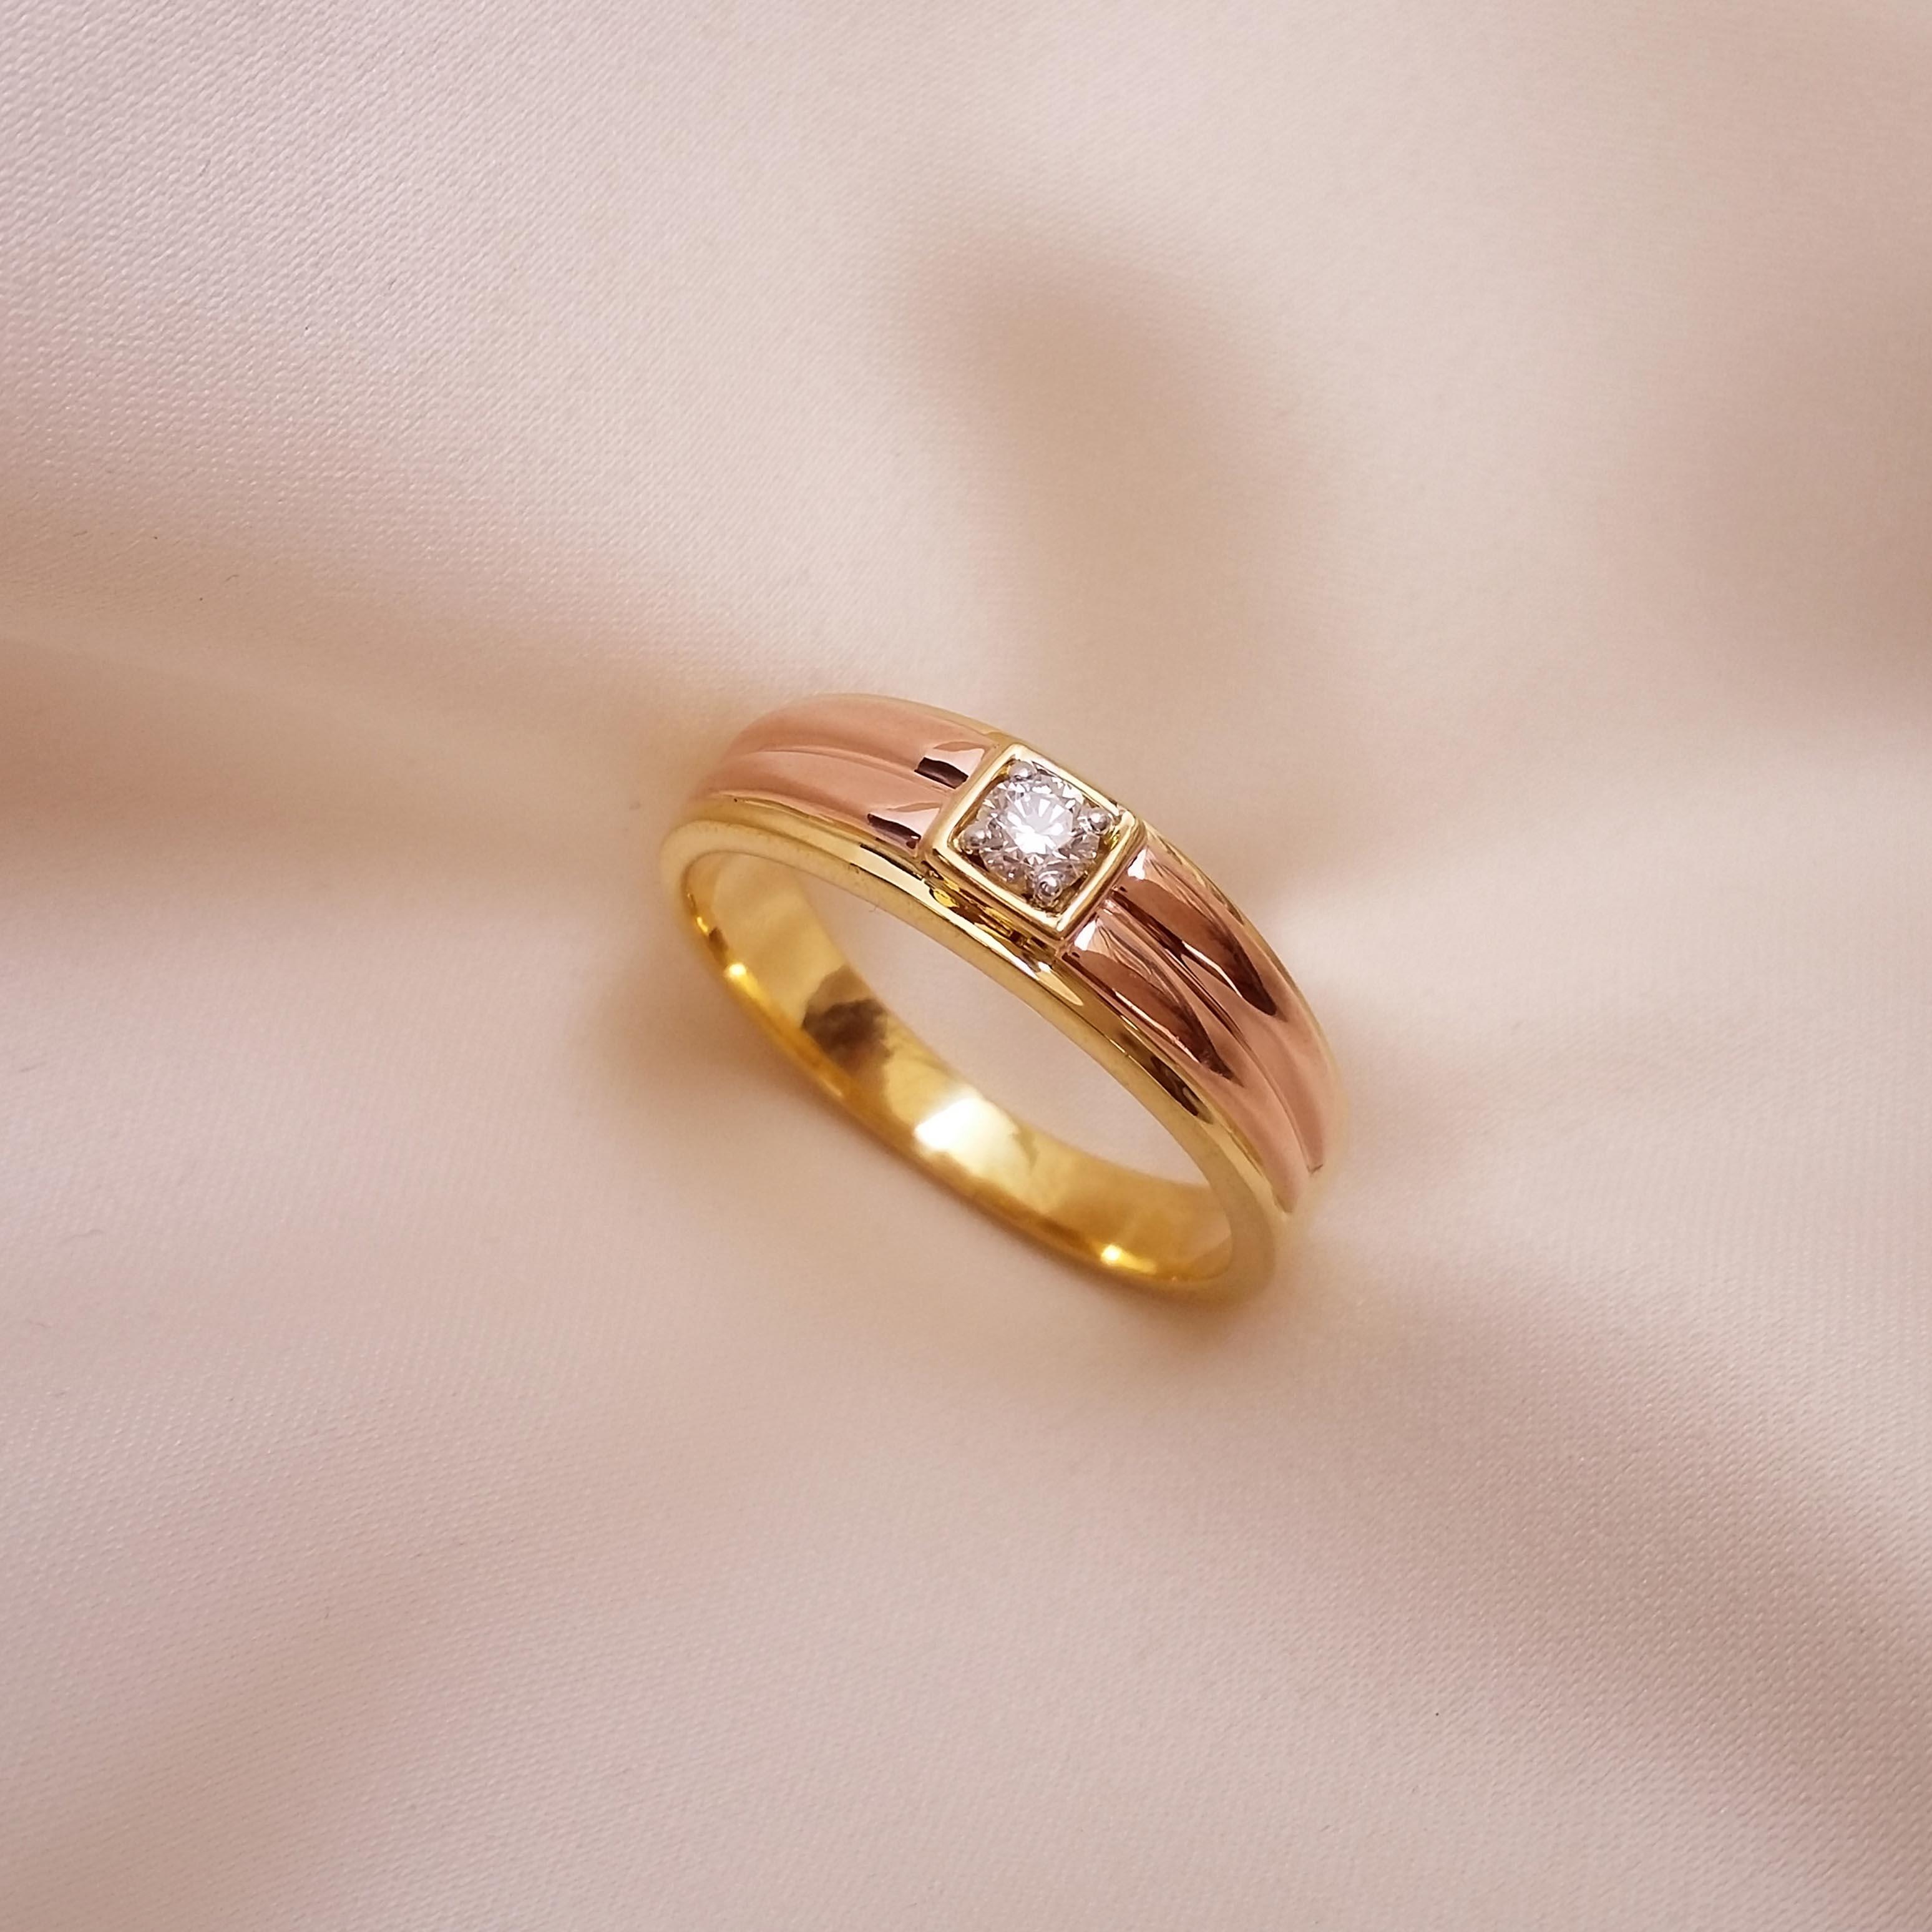 Buy 14K White Gold Men's Ring, Men's Diamond Band, Men's Engagement Ring. Men's  Wedding Band, 1.7 Ct Round Diamond Band, Eternity Band for Him Online in  India - Etsy